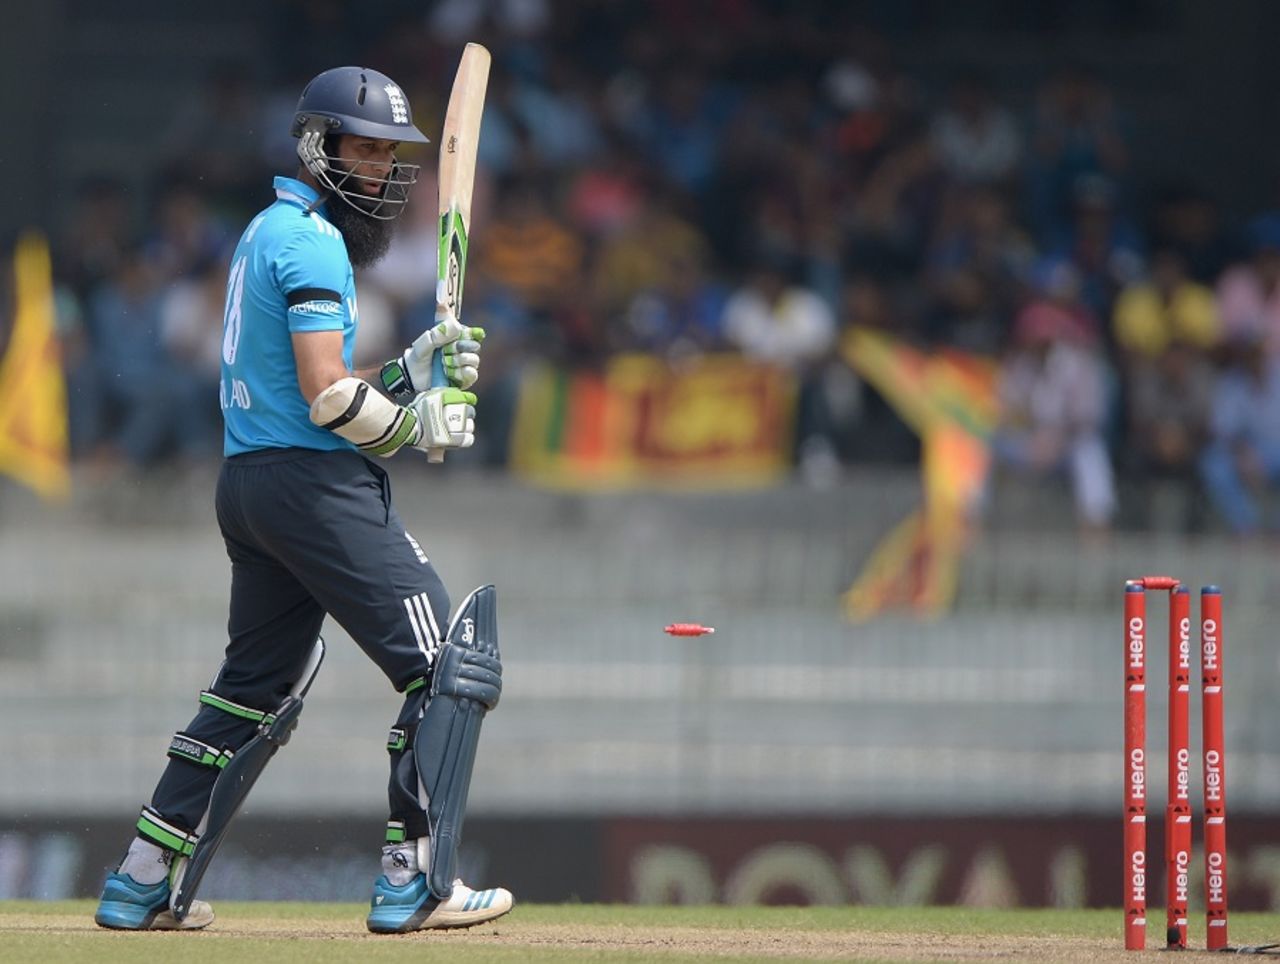 Moeen Ali looks back to see his stumps disturbed, Sri Lanka v England, 2nd ODI, Colombo, November 29, 2014